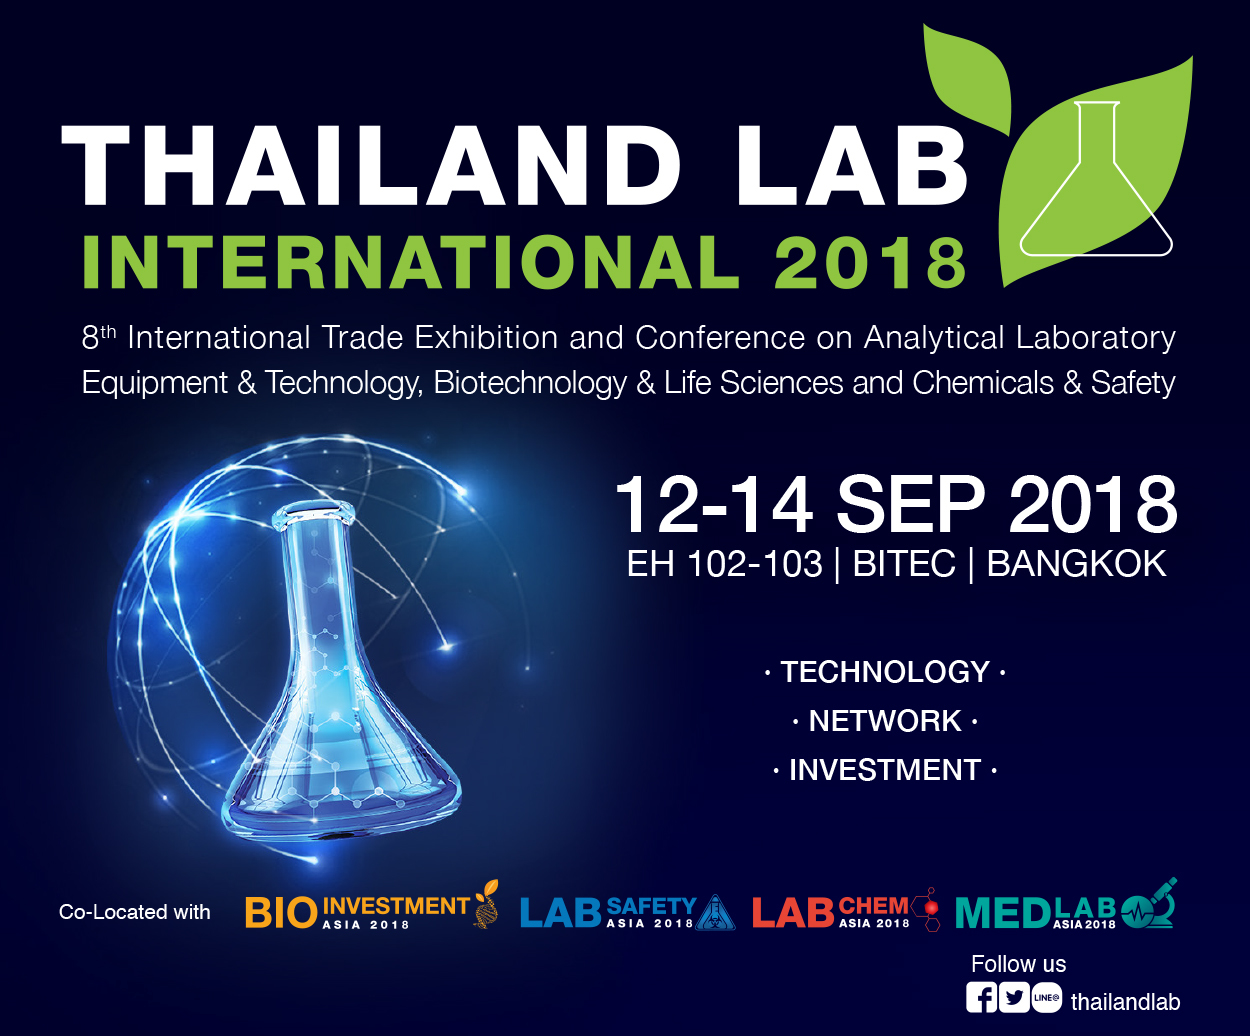 Thailand Lab International 2018